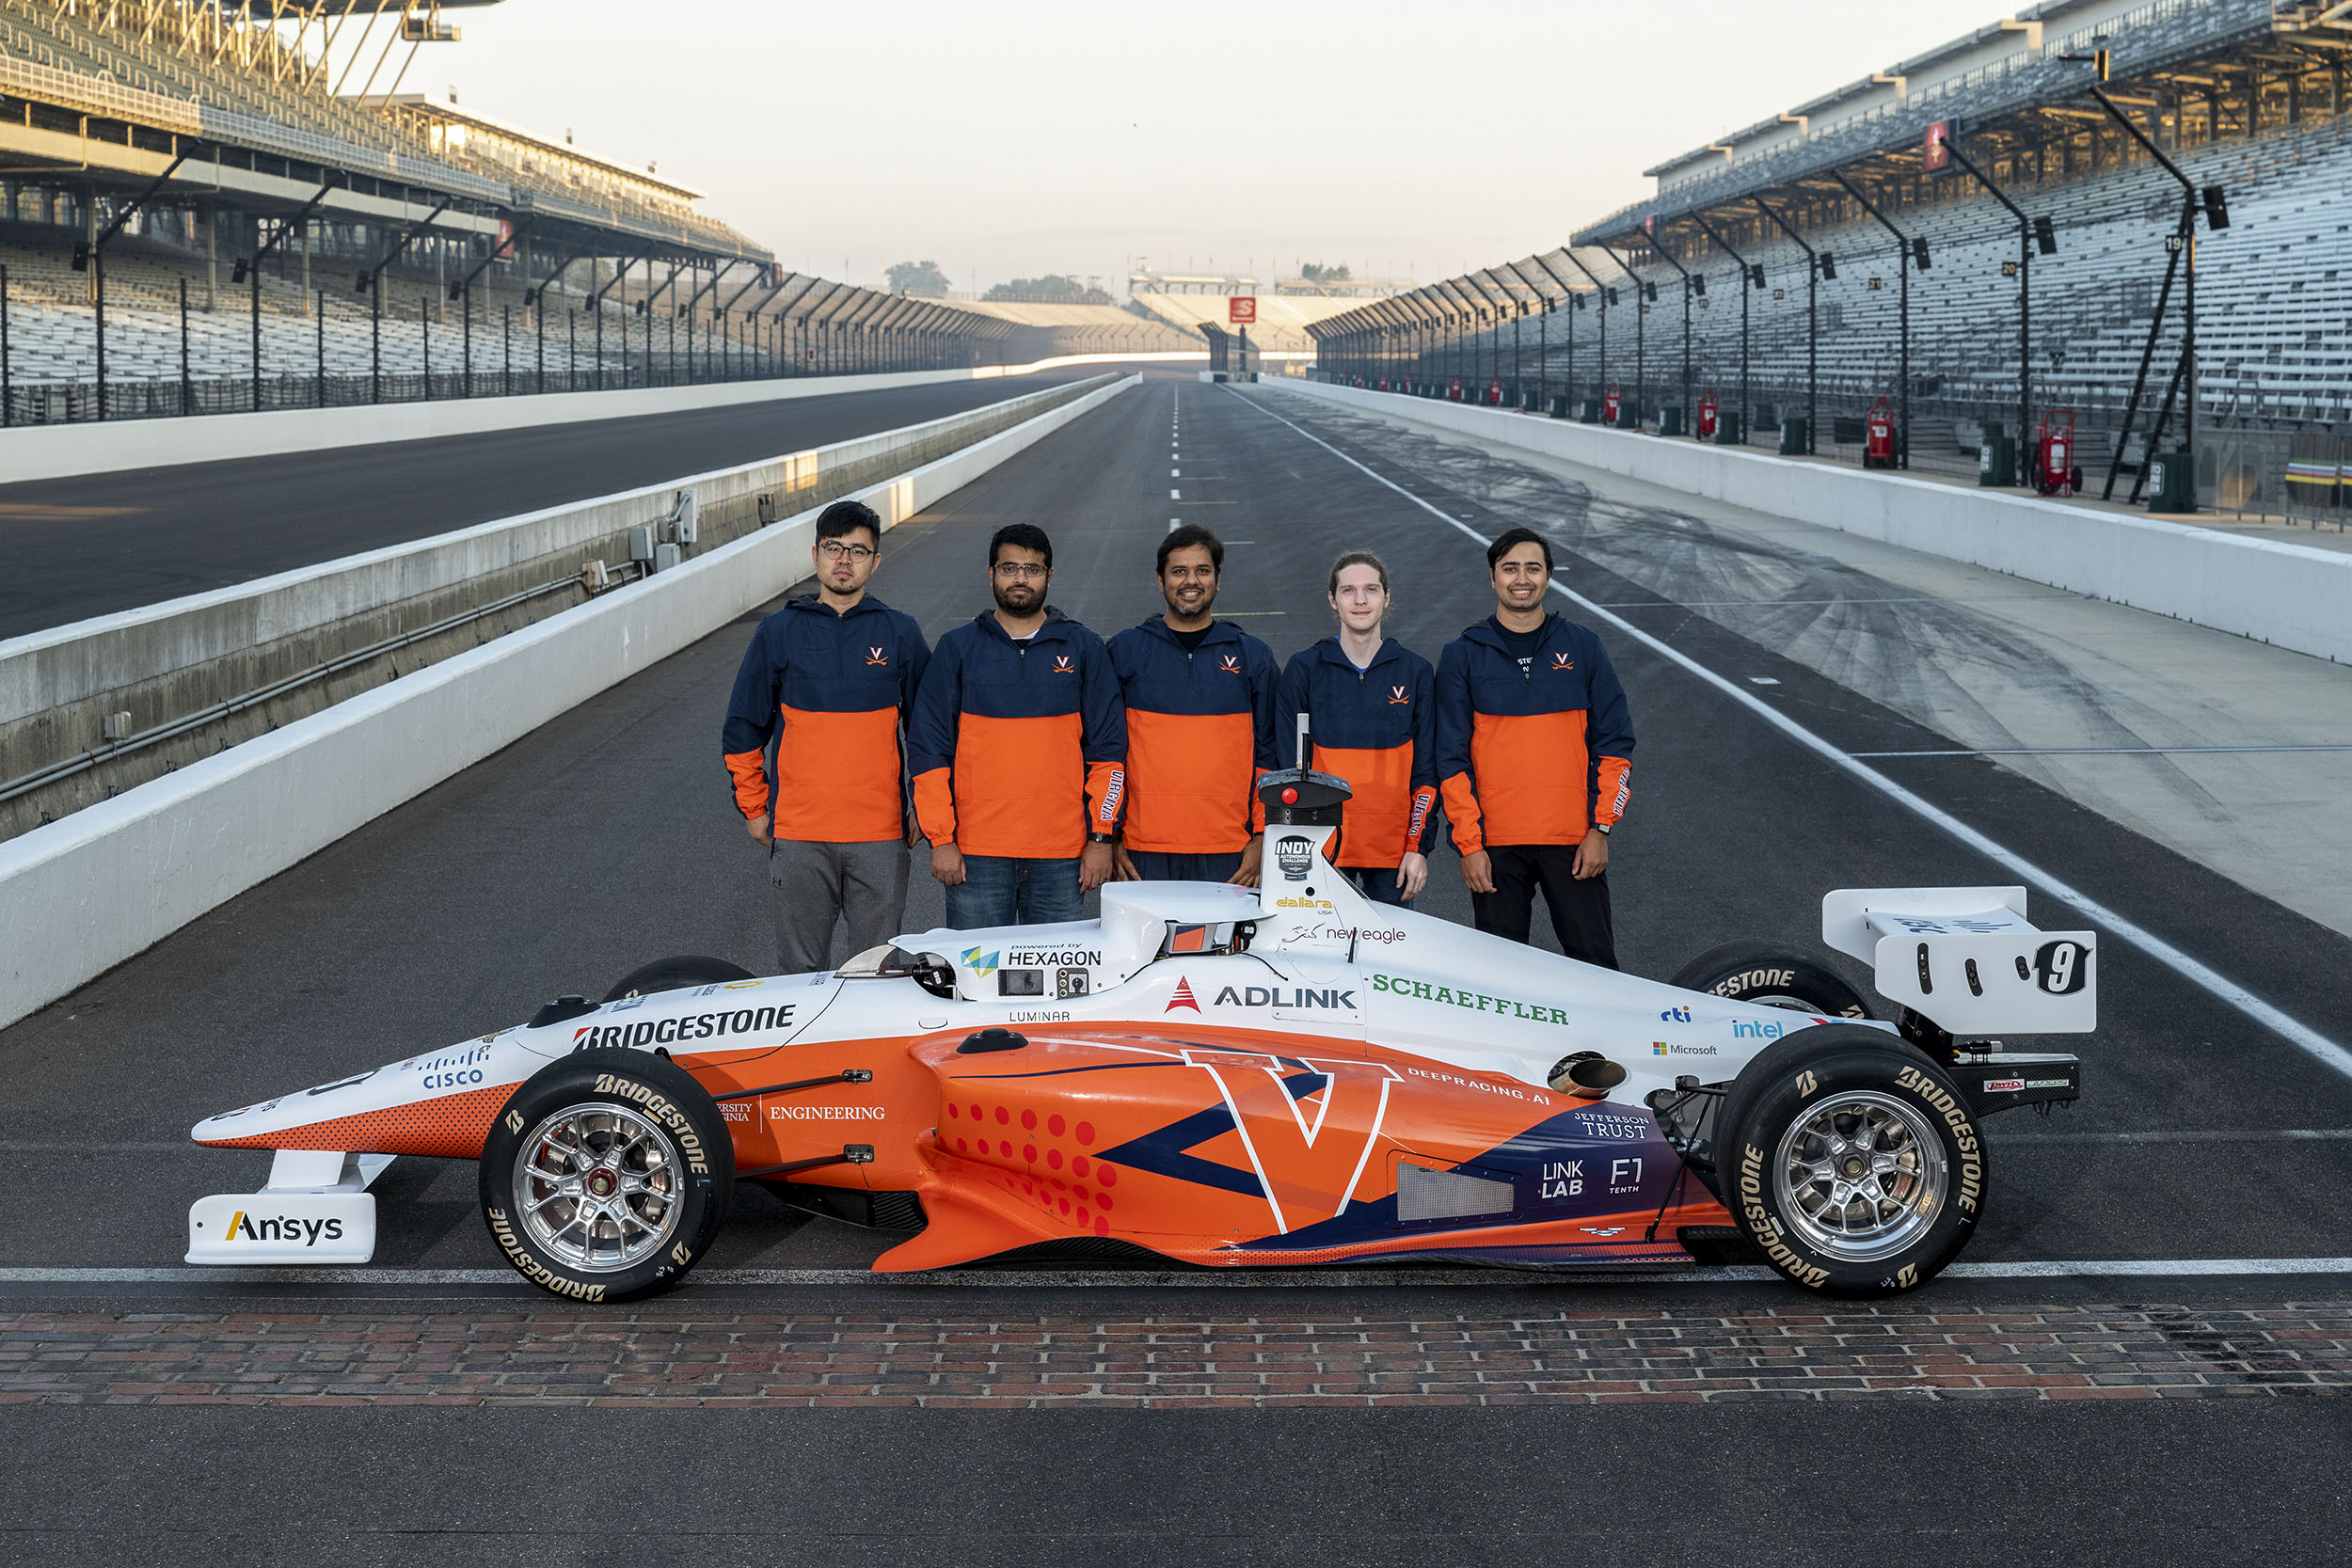 UVA Autonomous Racing team posing with their Autonomous car on the Indianapolis Motor Speedway